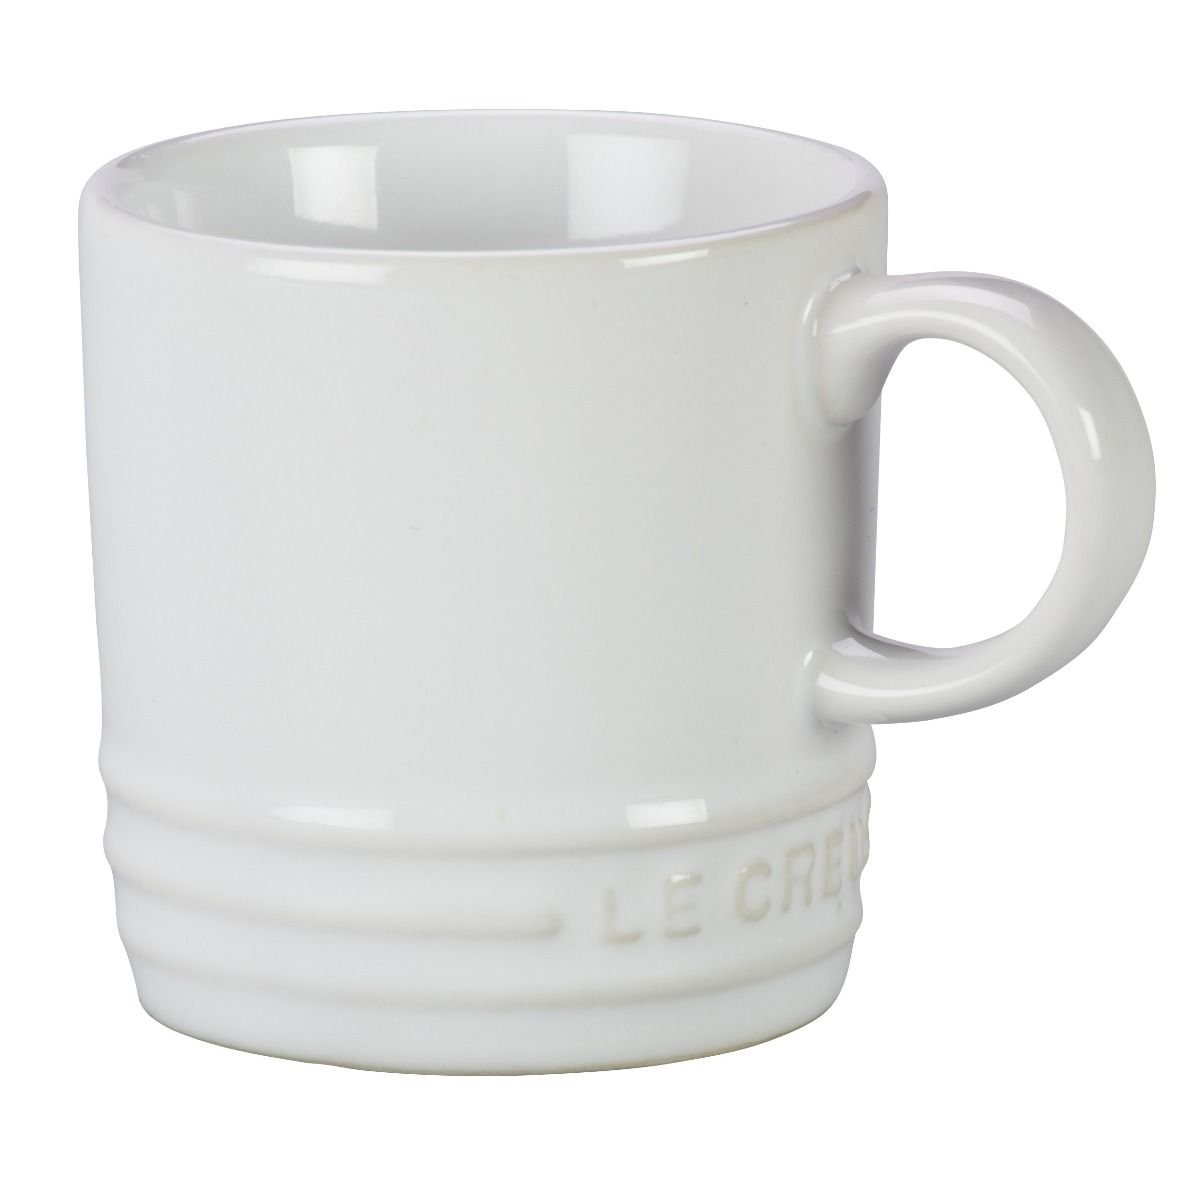 Sweese 3.5oz Porcelain Espresso Cups Set of 4, Mini